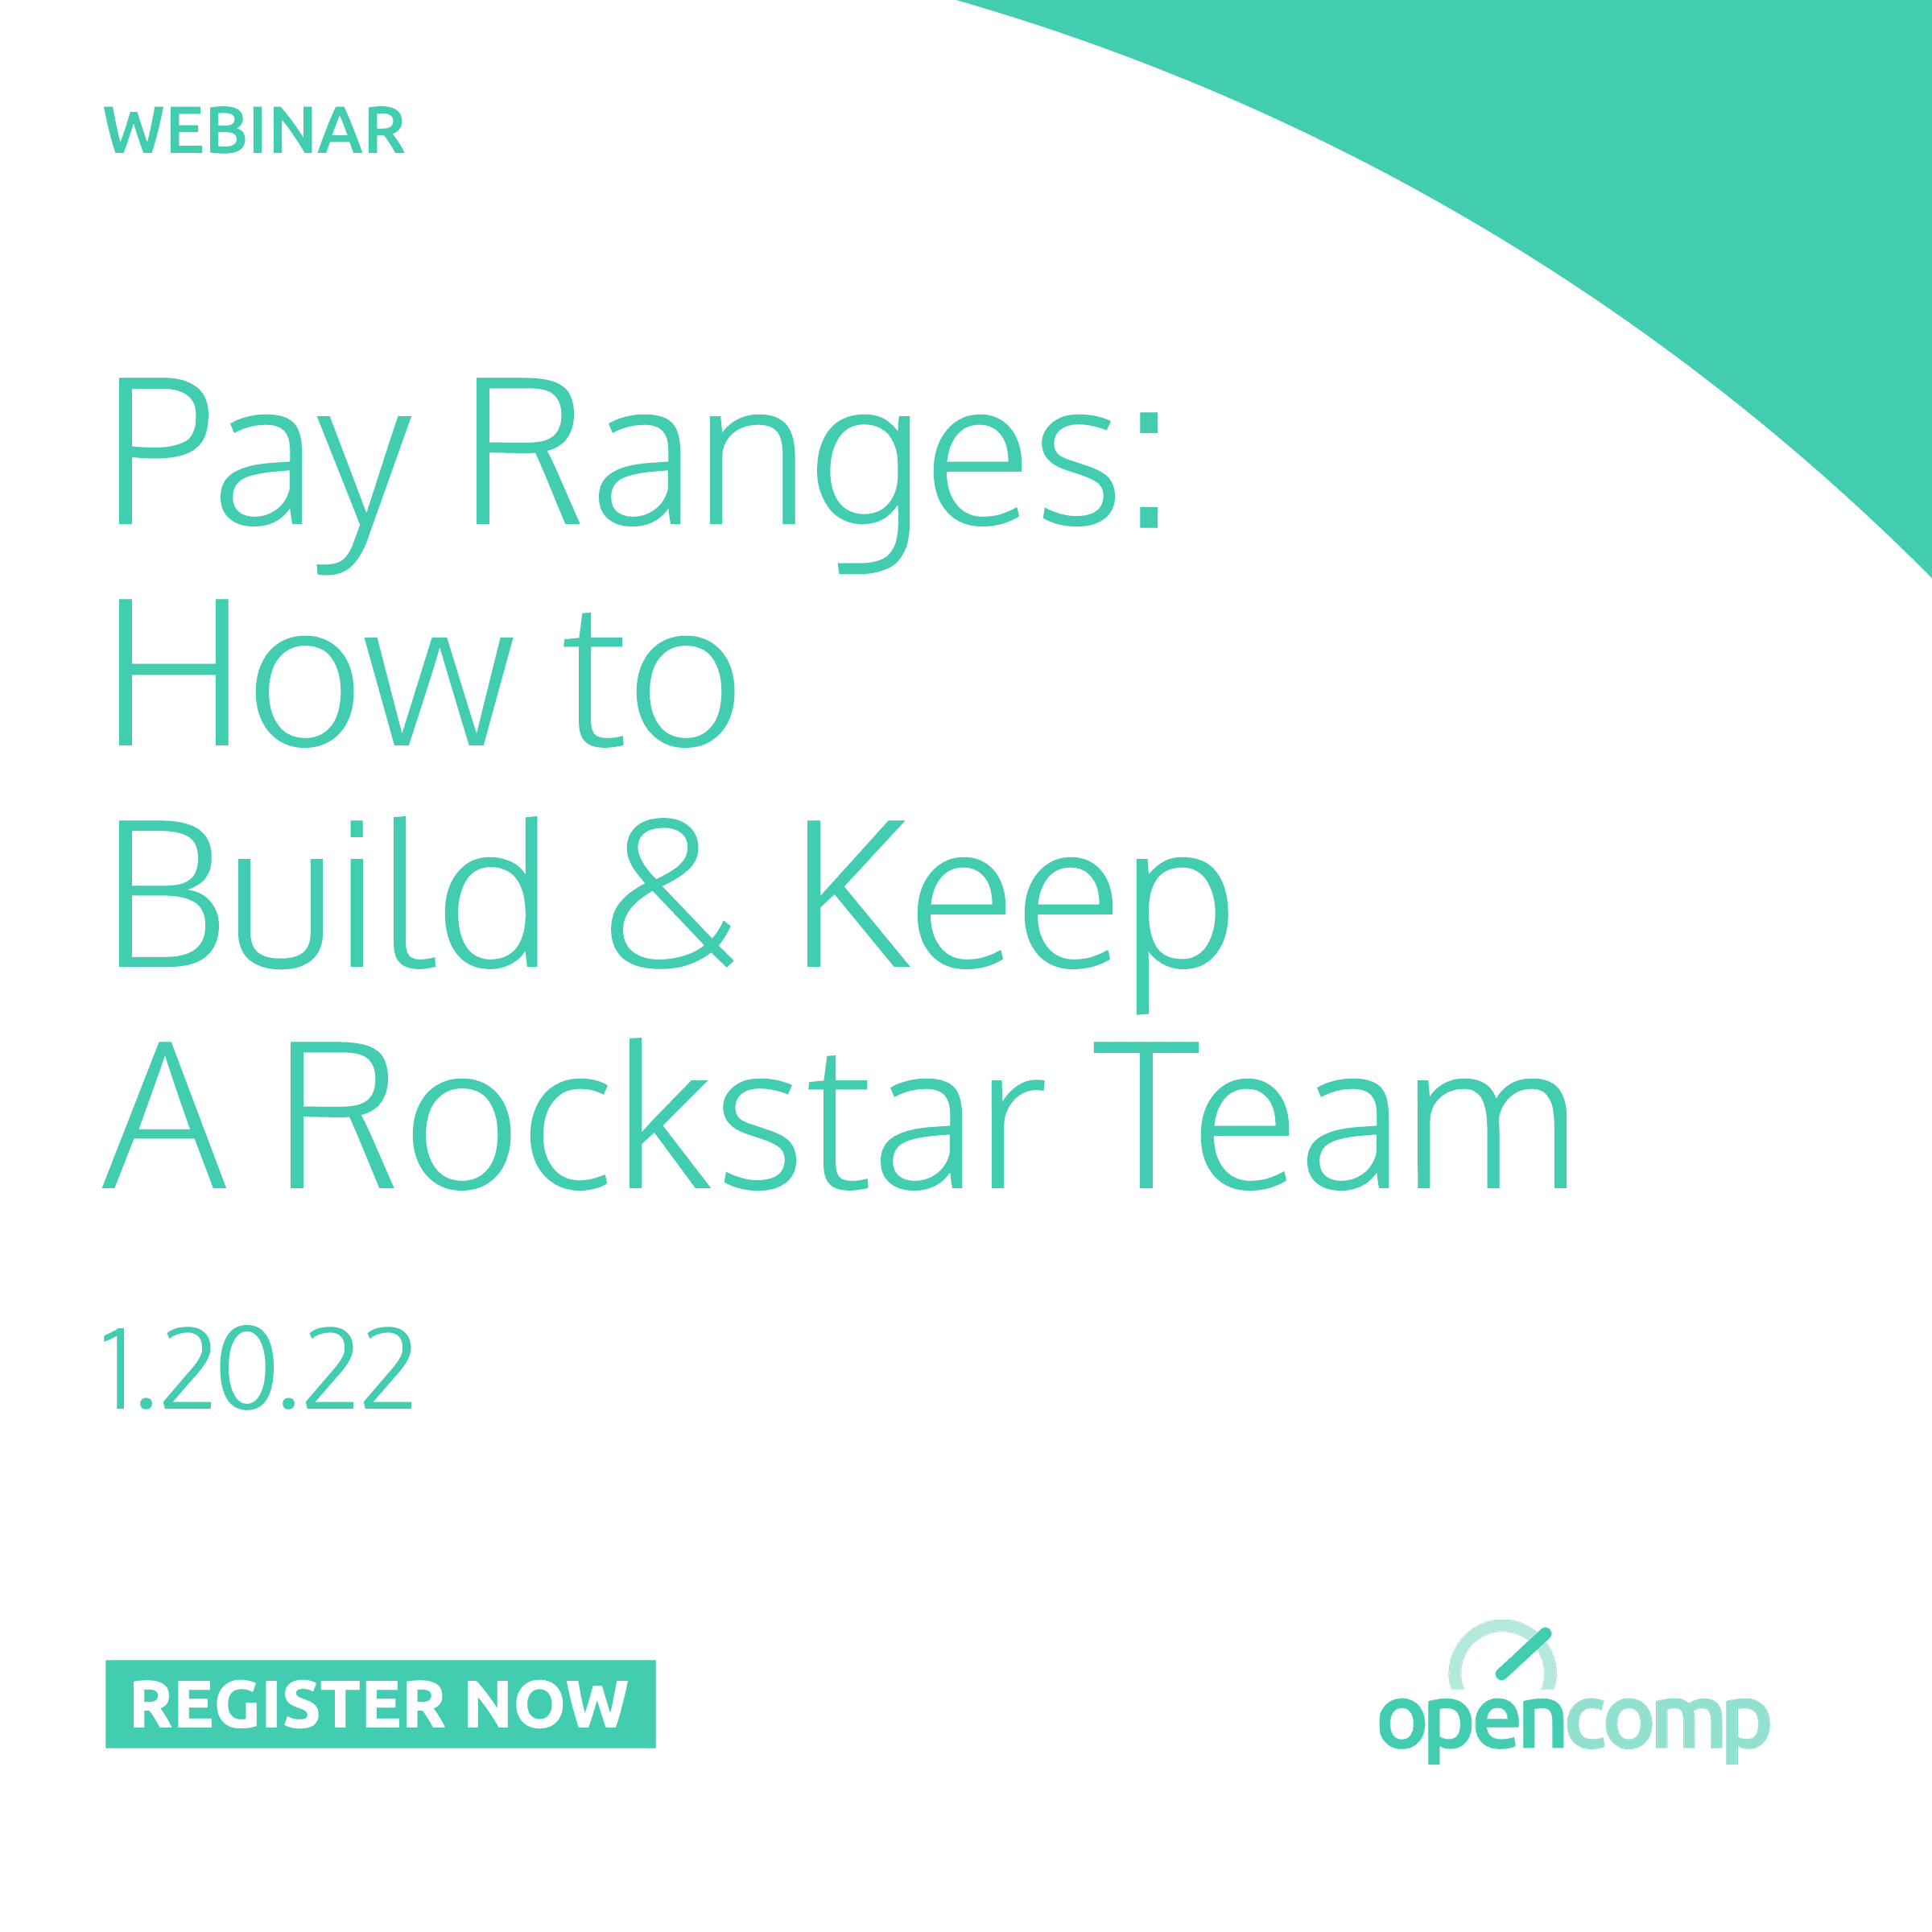 Pay Ranges: How to Build & Keep A Rockstar Team